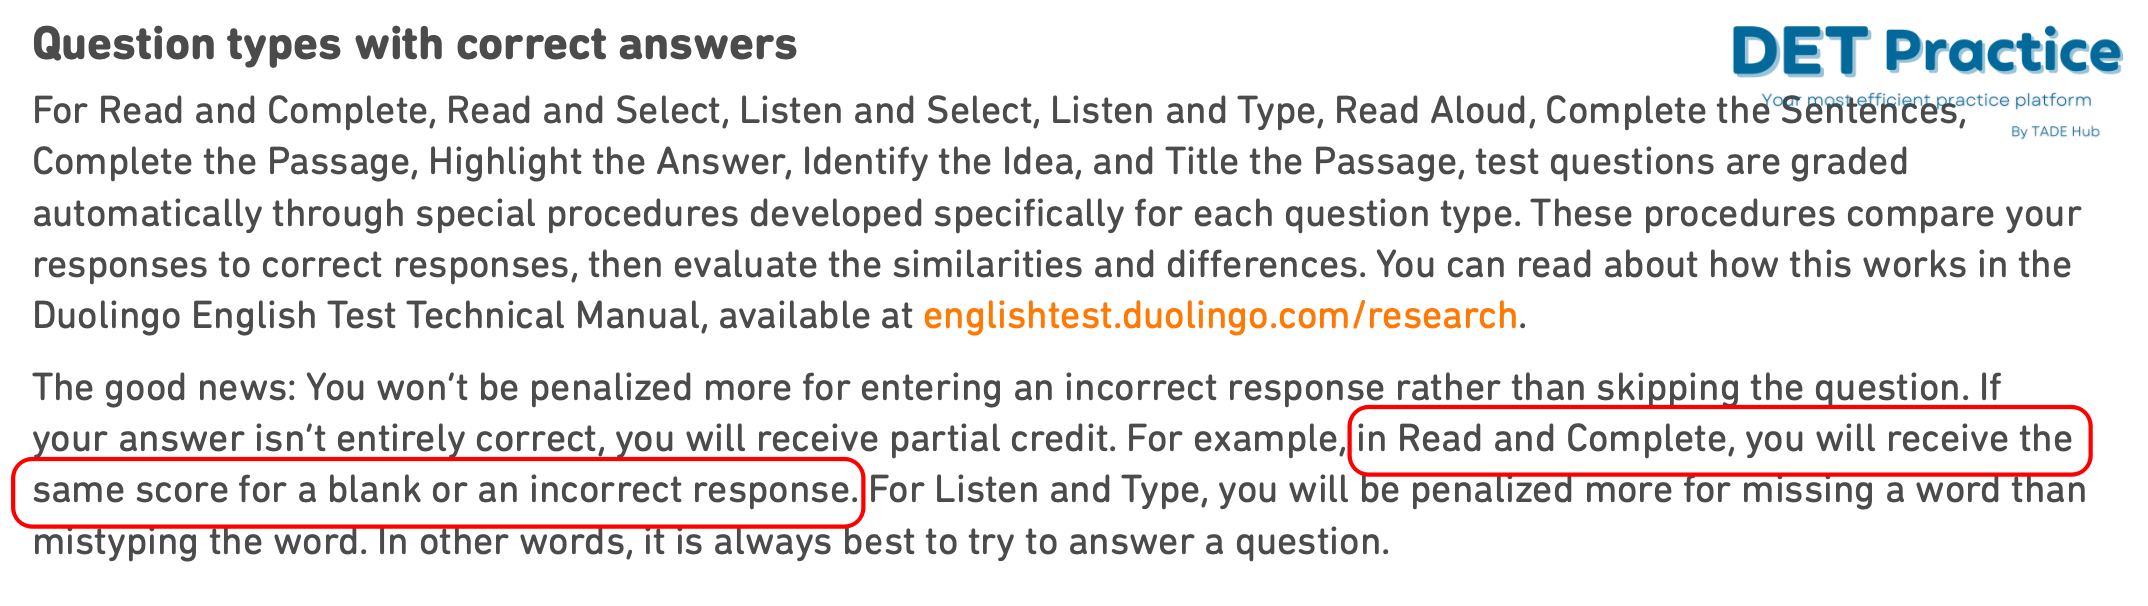 read and complete score explanation, det practice platform, Duolingo Test preparation, question types